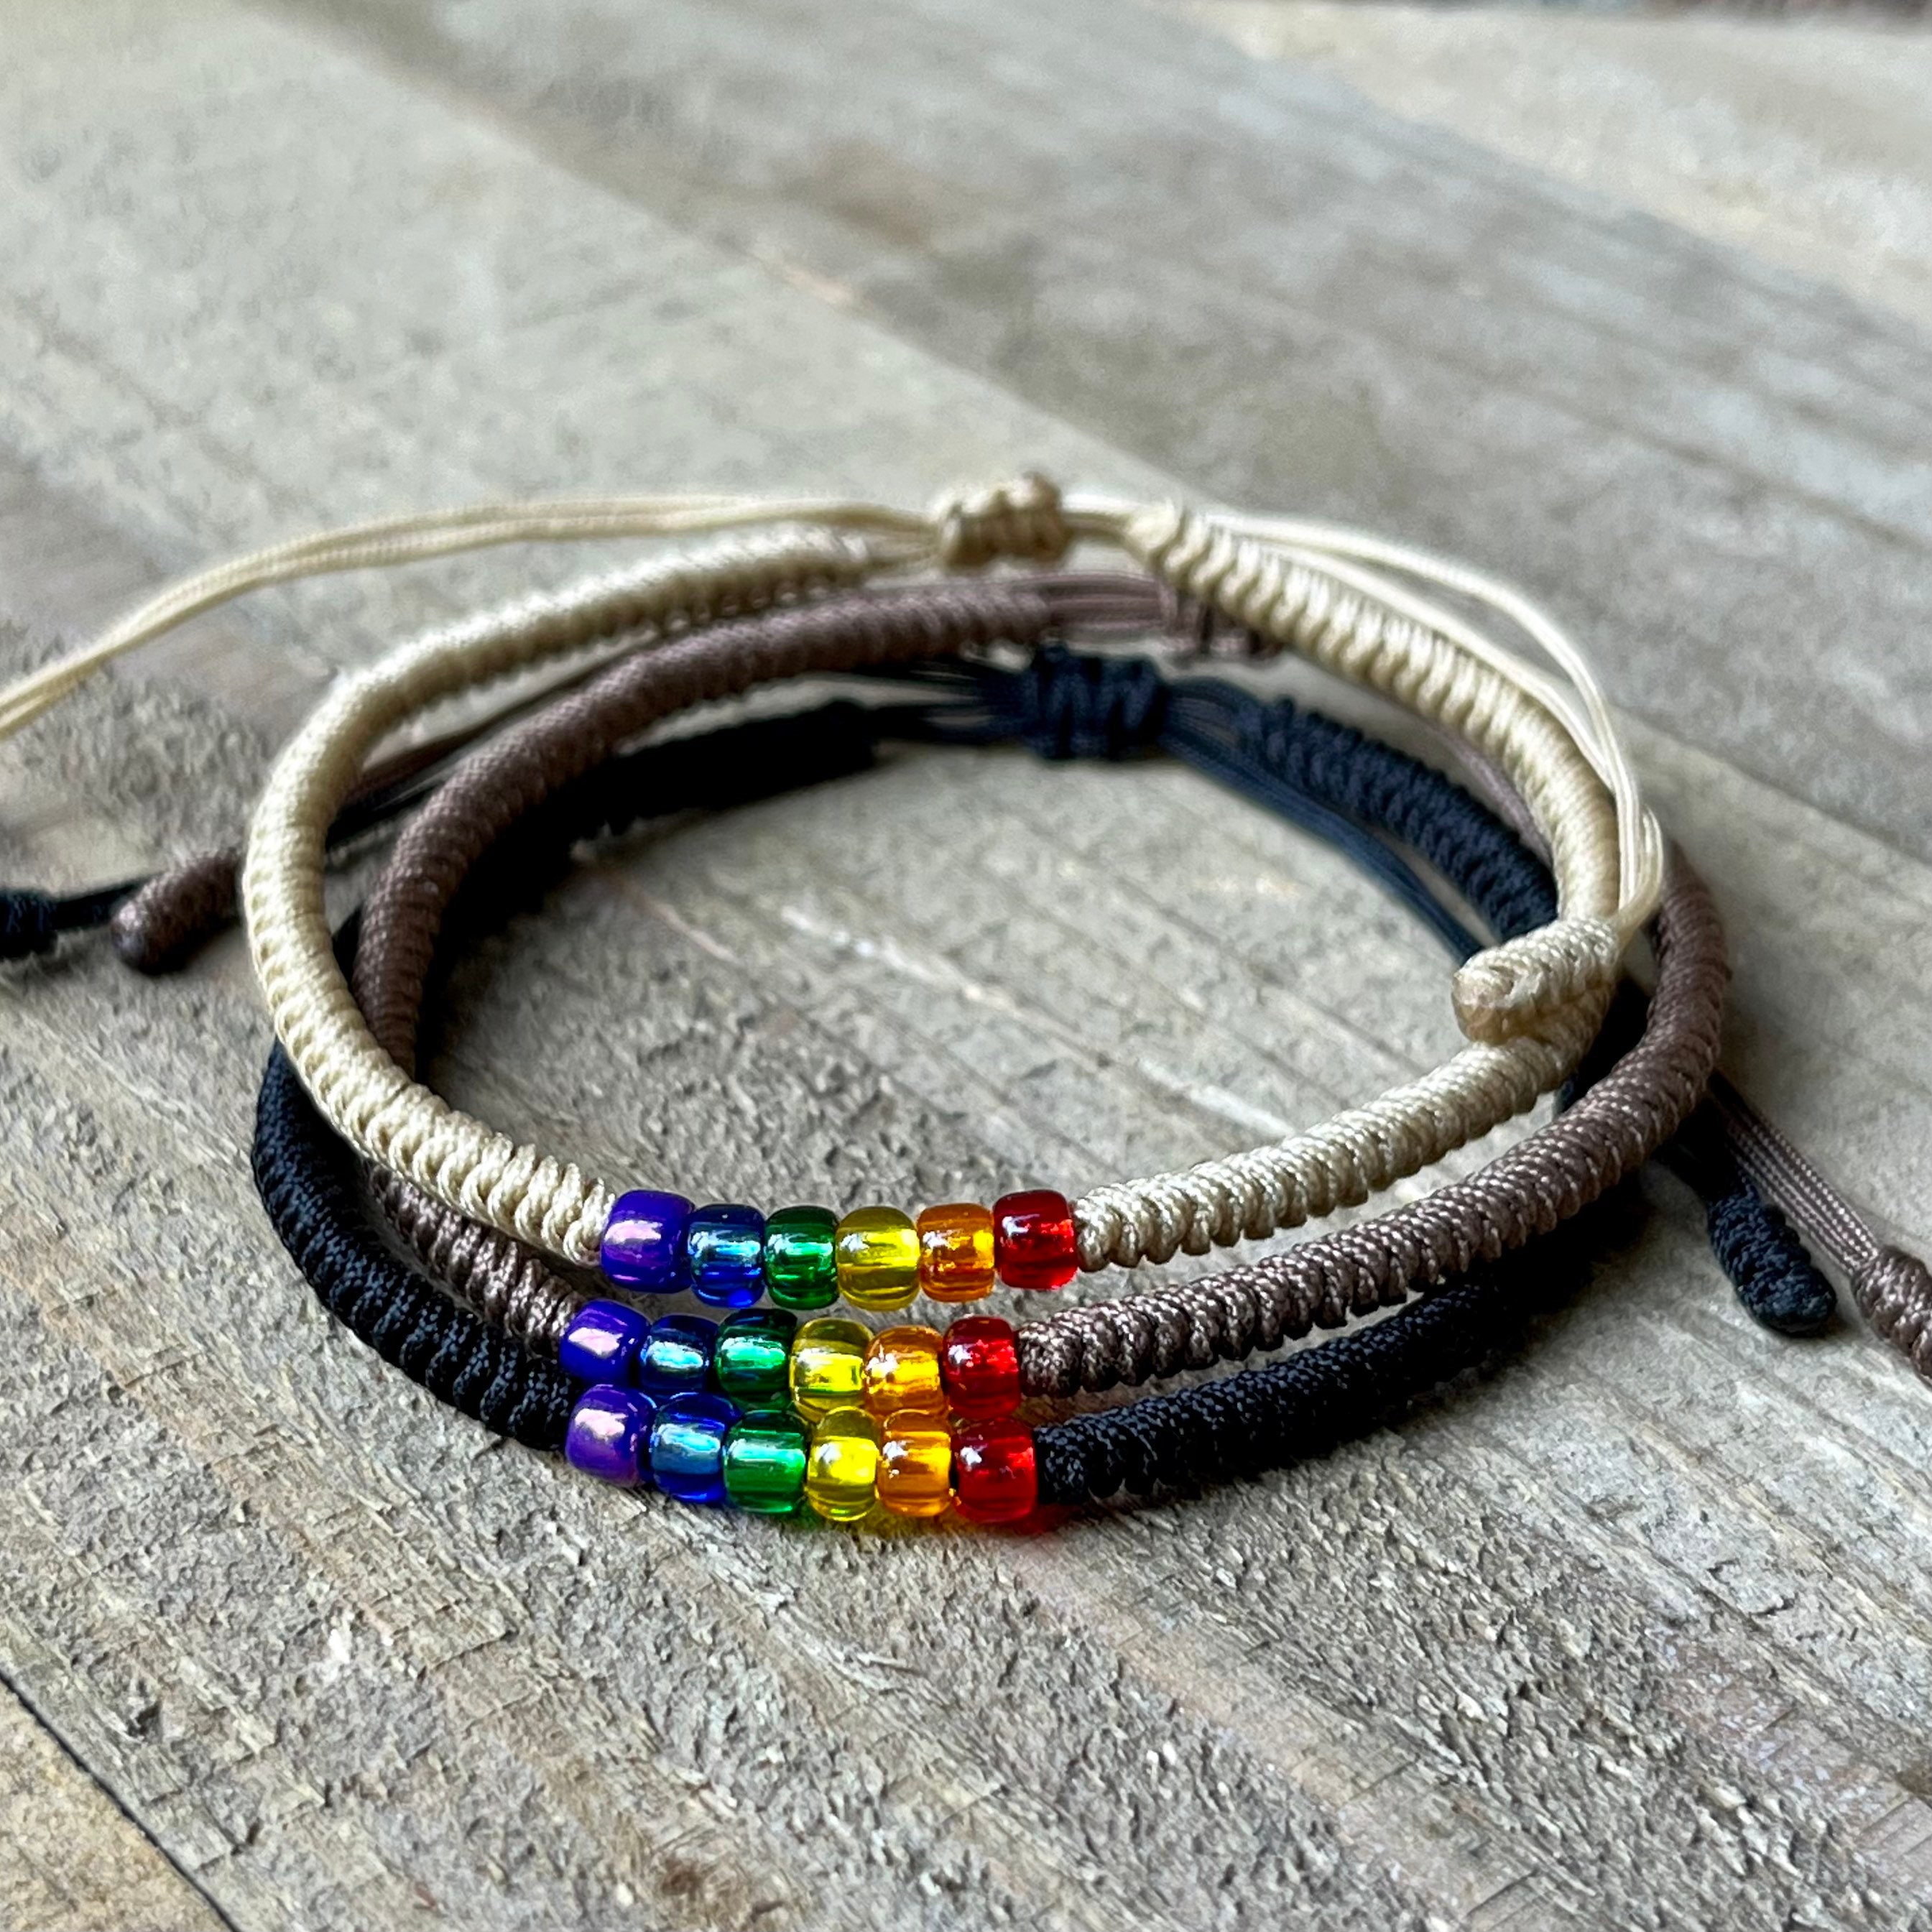 Lesbian Pride Leather Rope Bracelet - Pride Mode Black